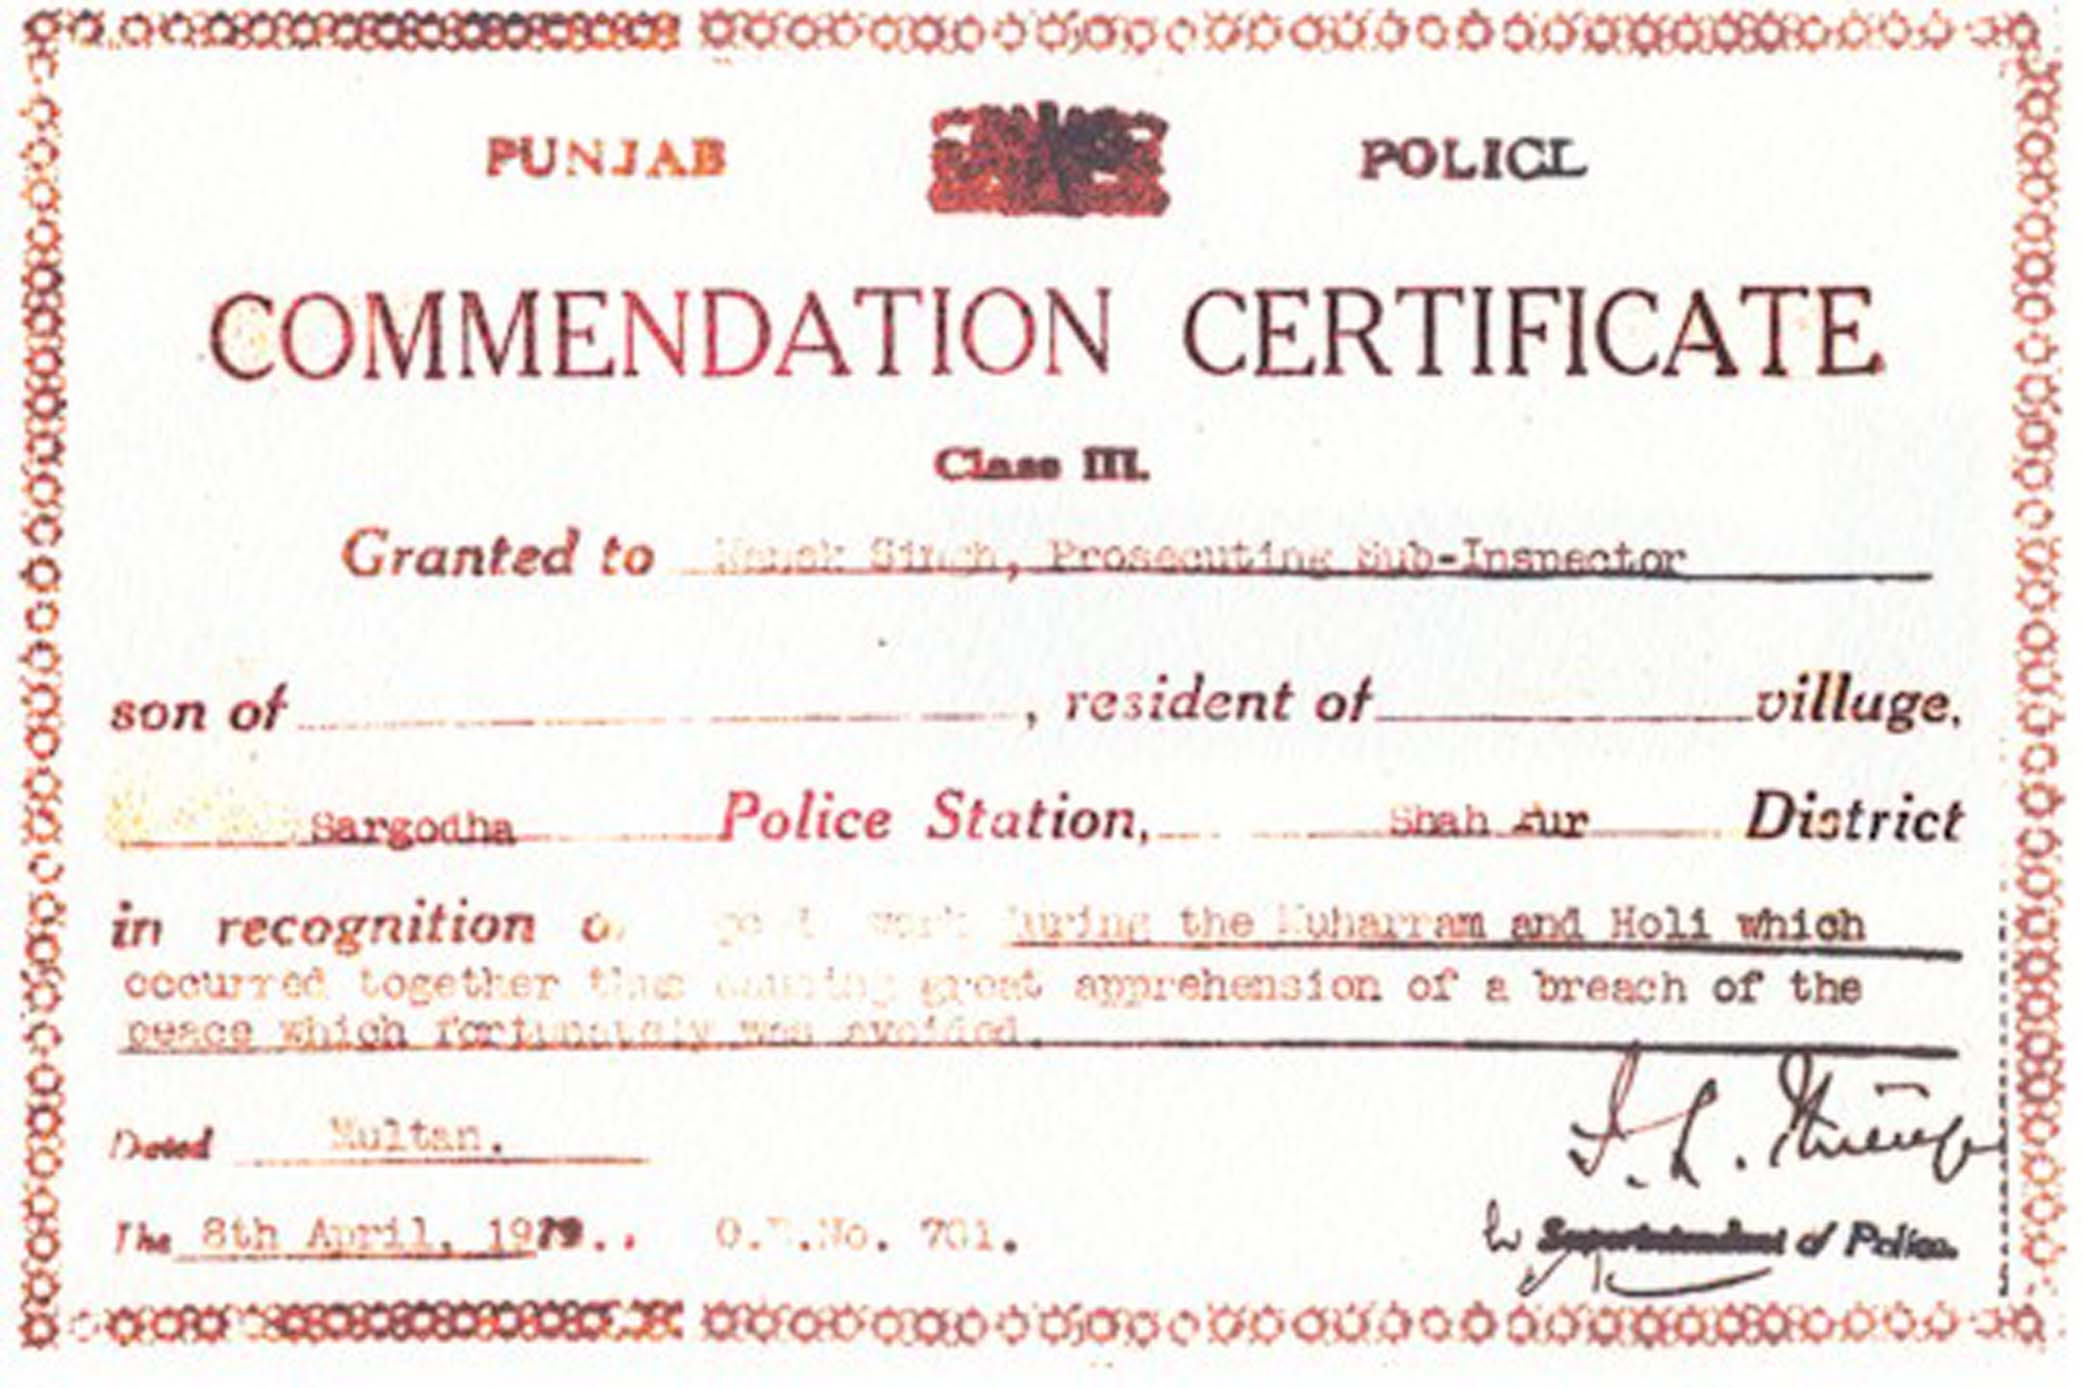 Police Certificate3.jpg (60541 bytes)